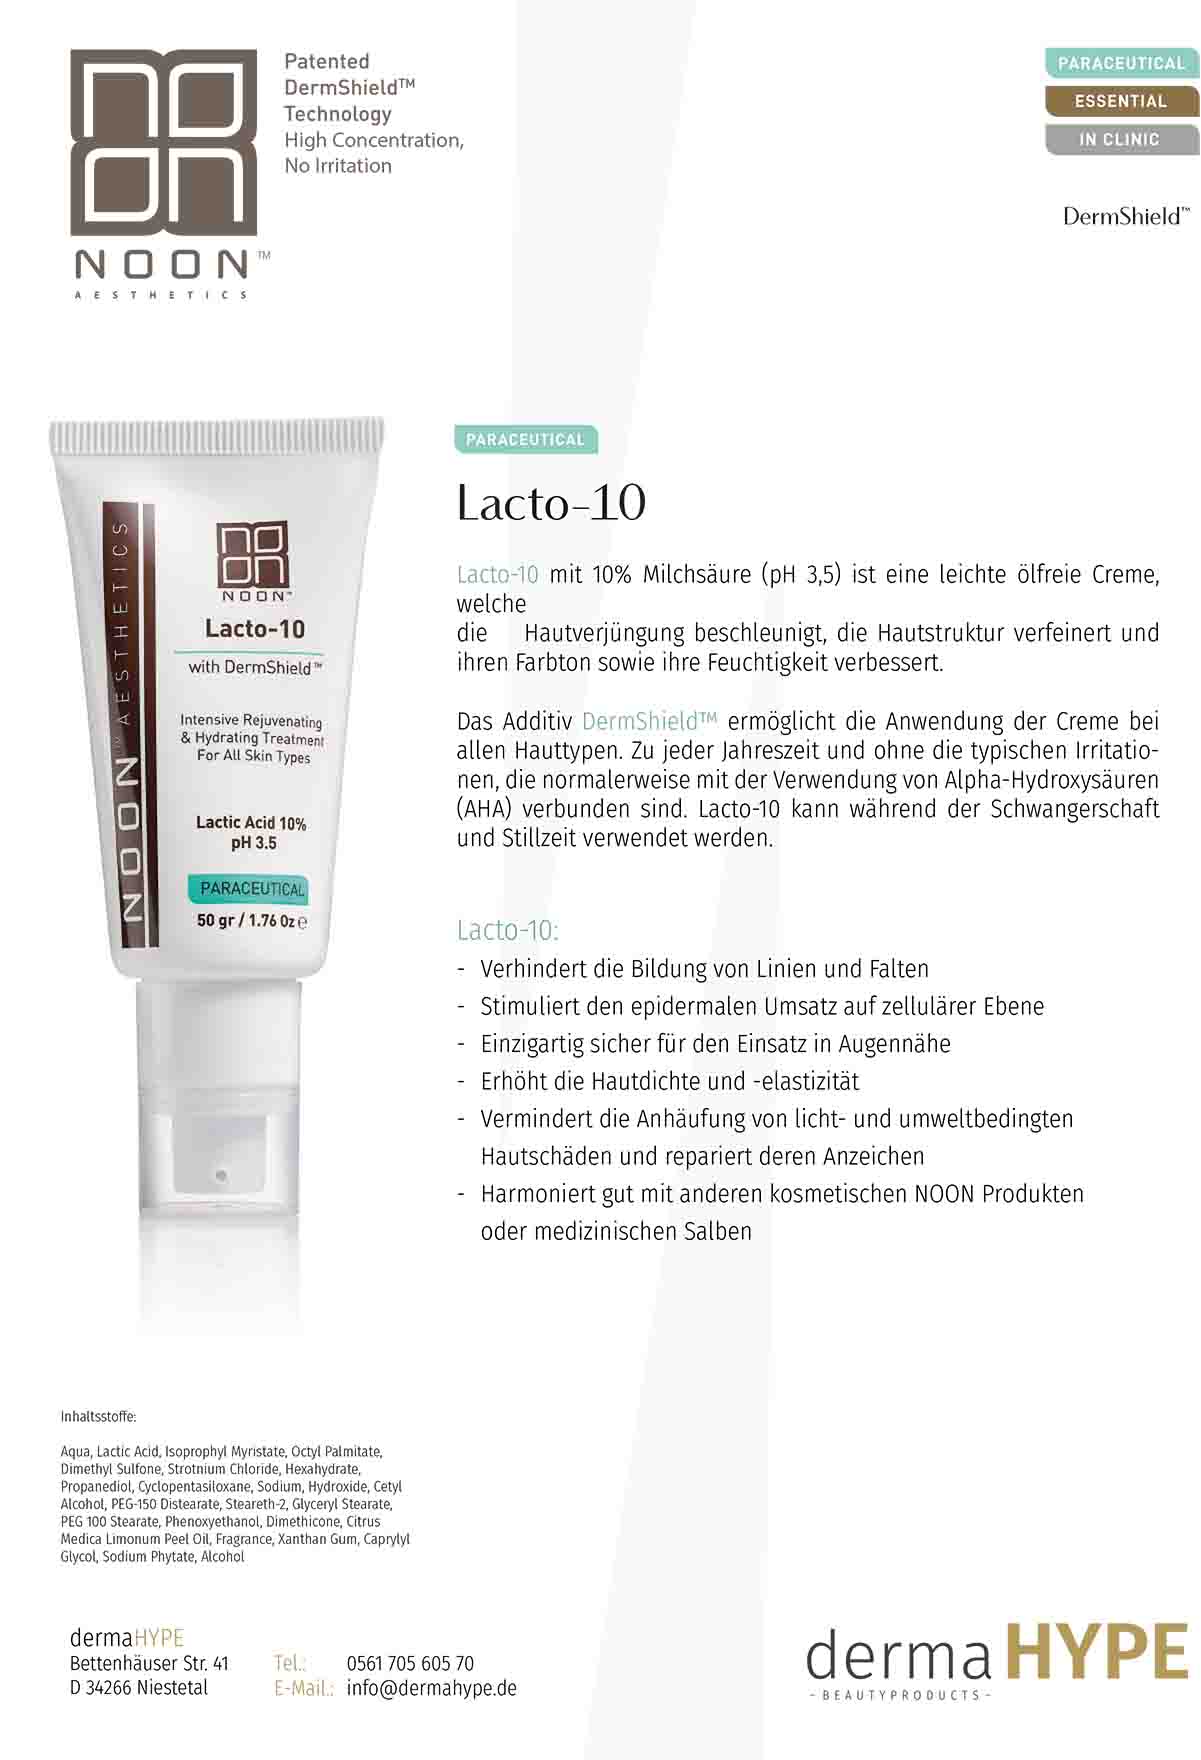 Lacto-10 leaflet | Yuliskin Kosmetik Studio